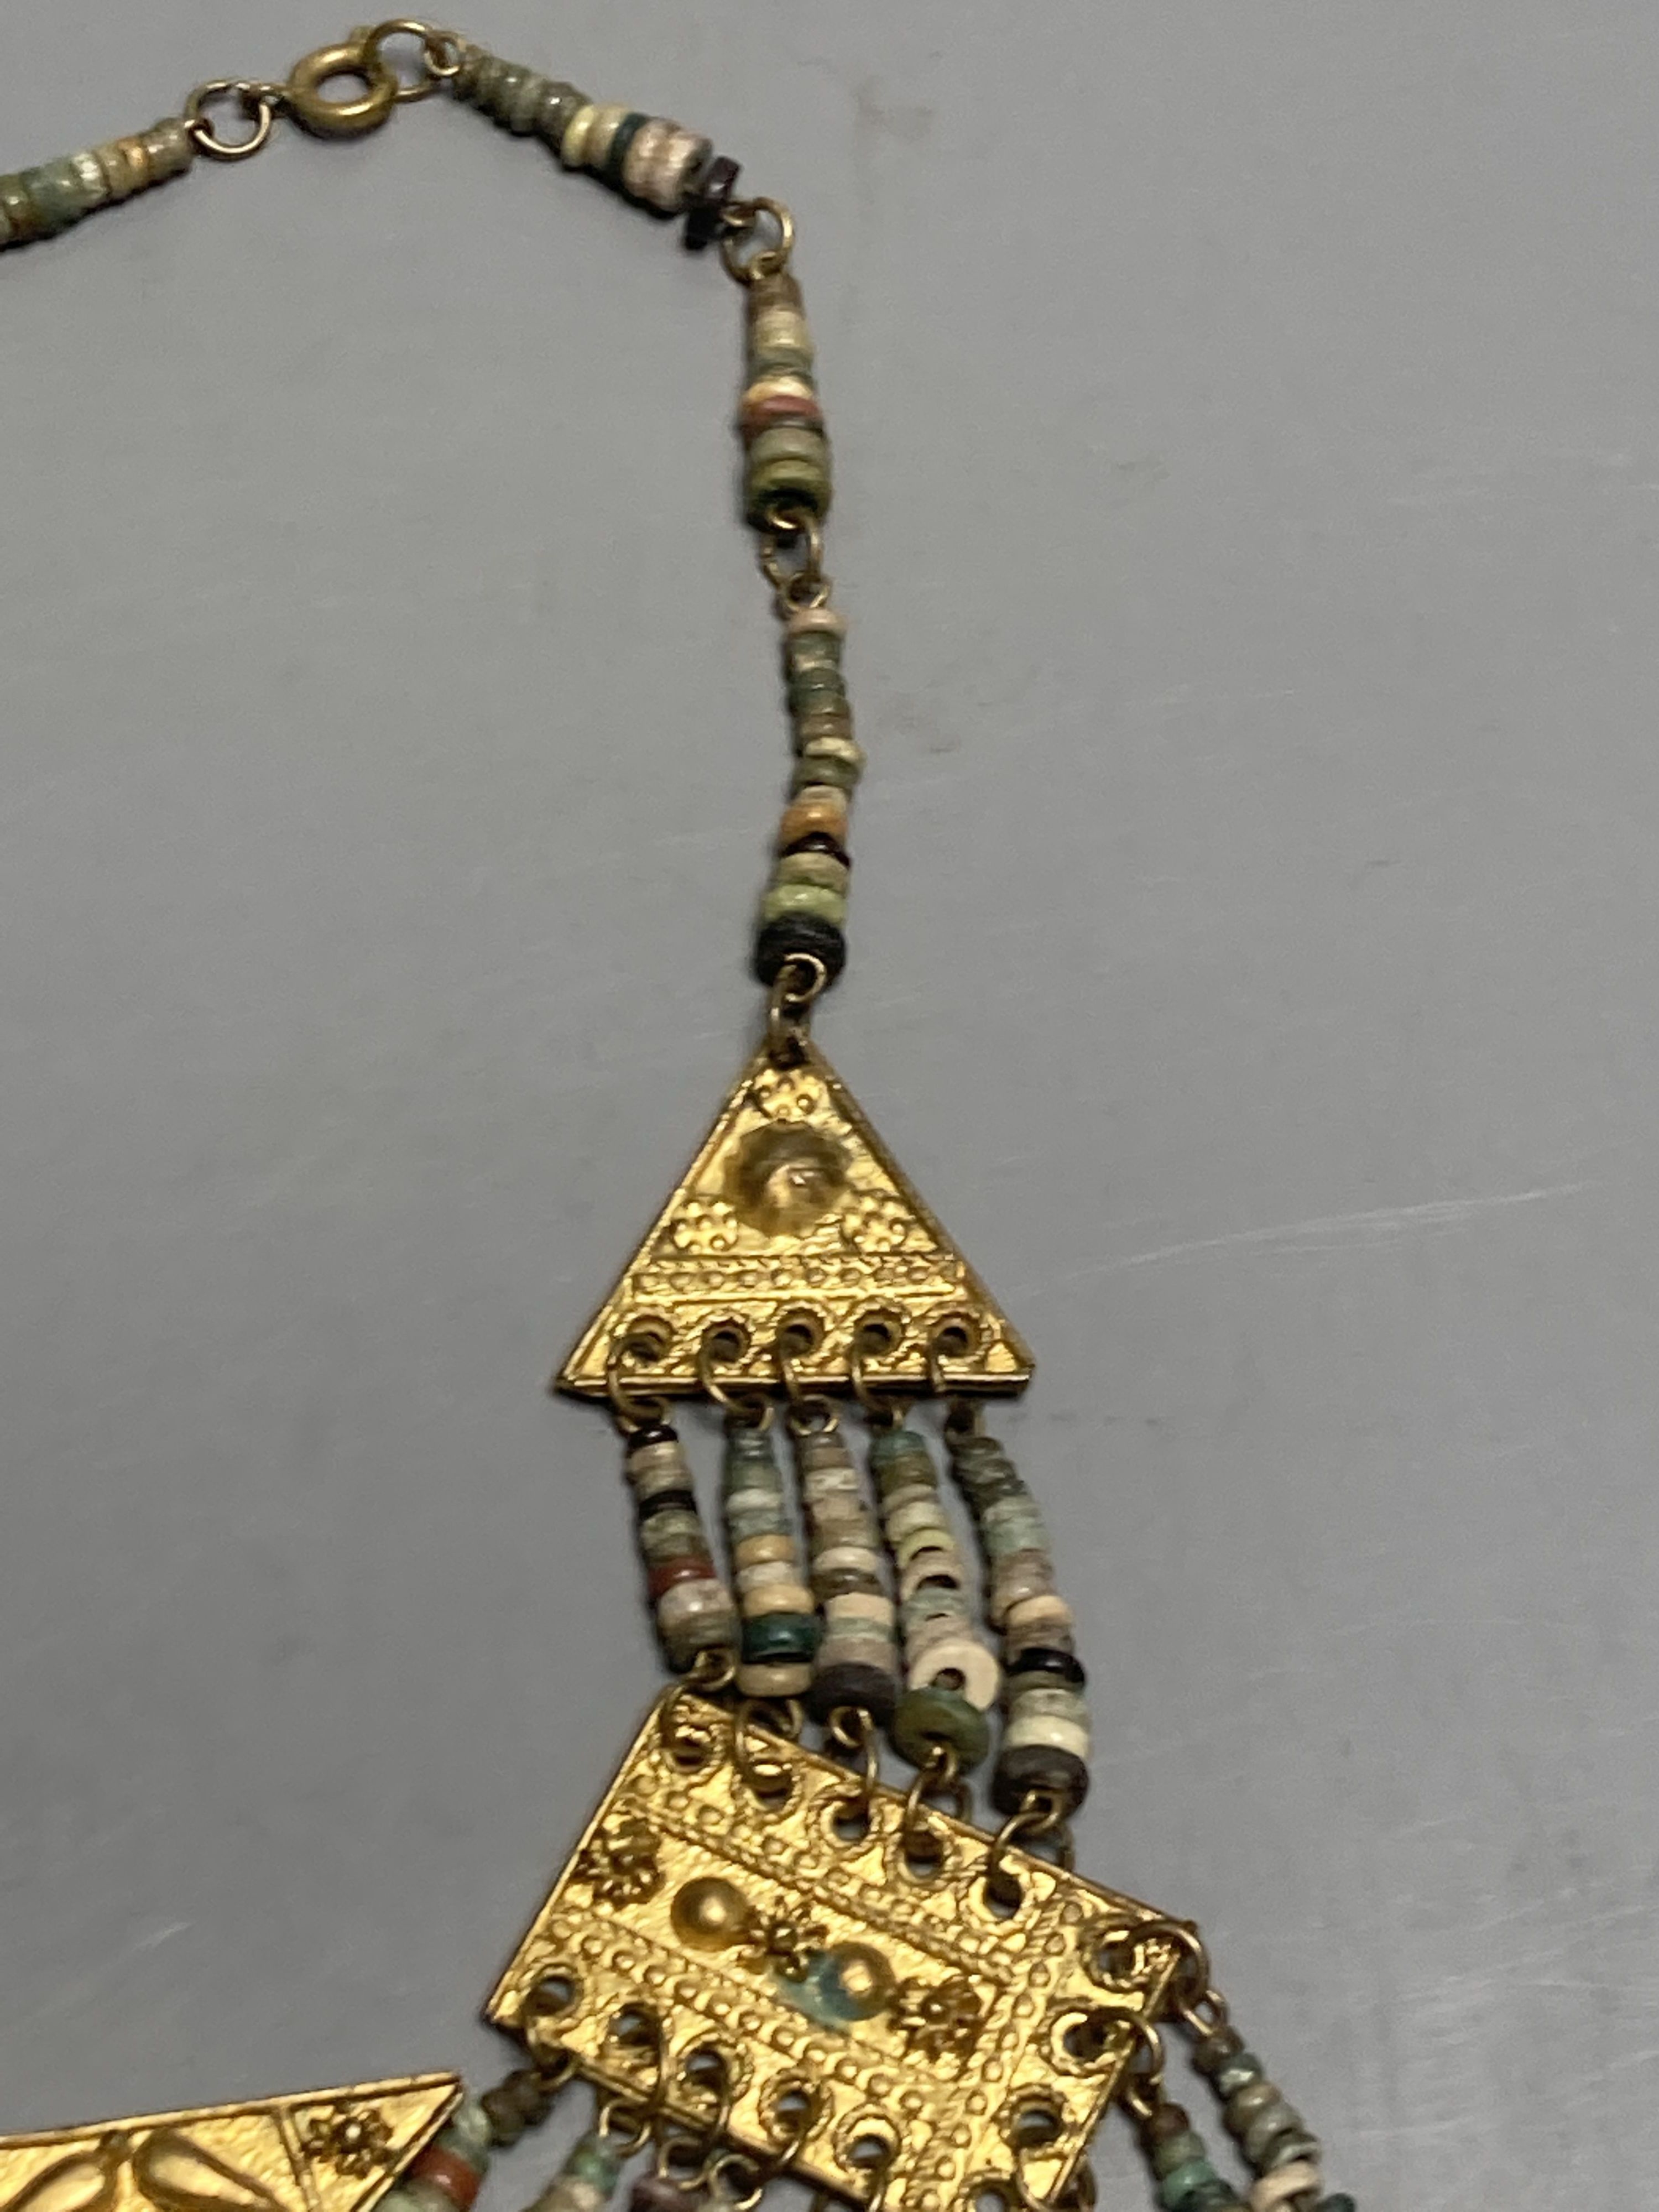 An antique Mayan? gilt metal and hardstone set drop necklace, 42cm.